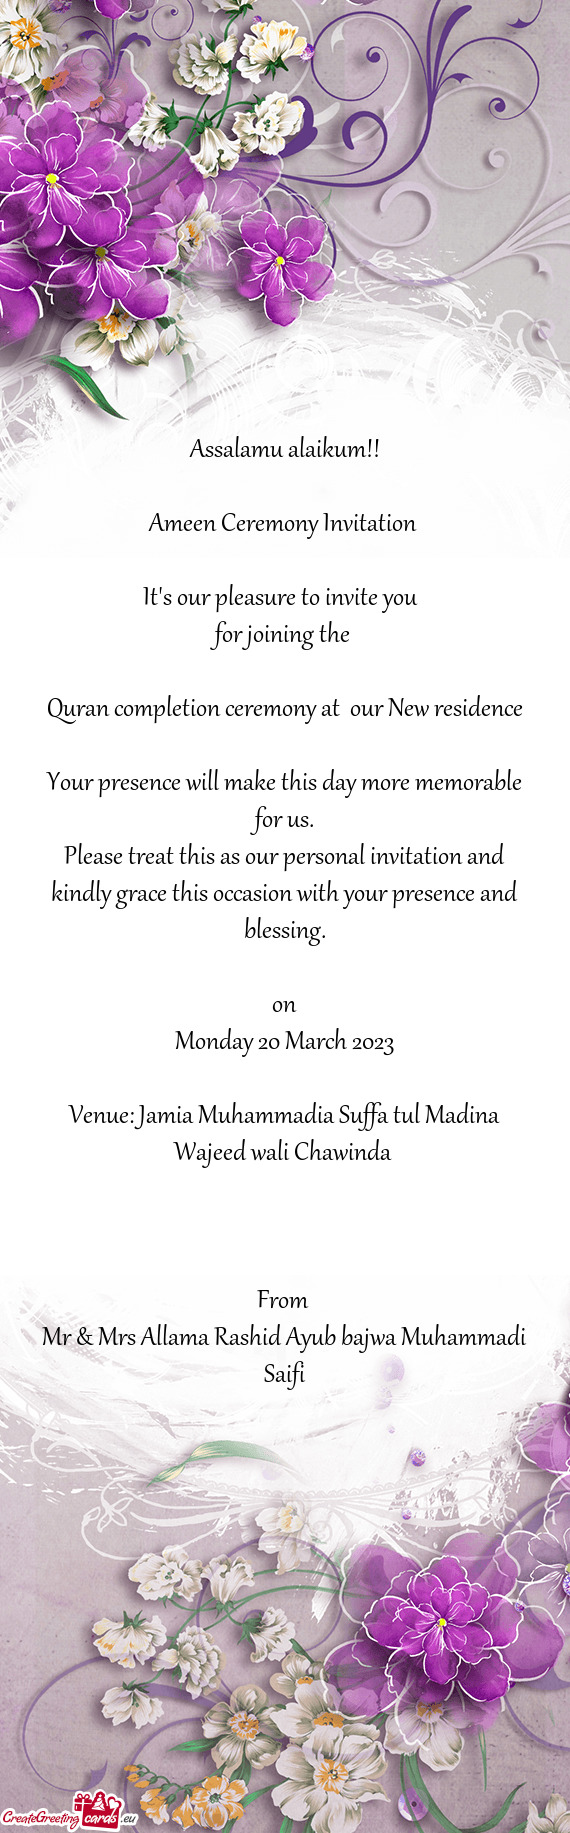 Ameen Ceremony Invitation